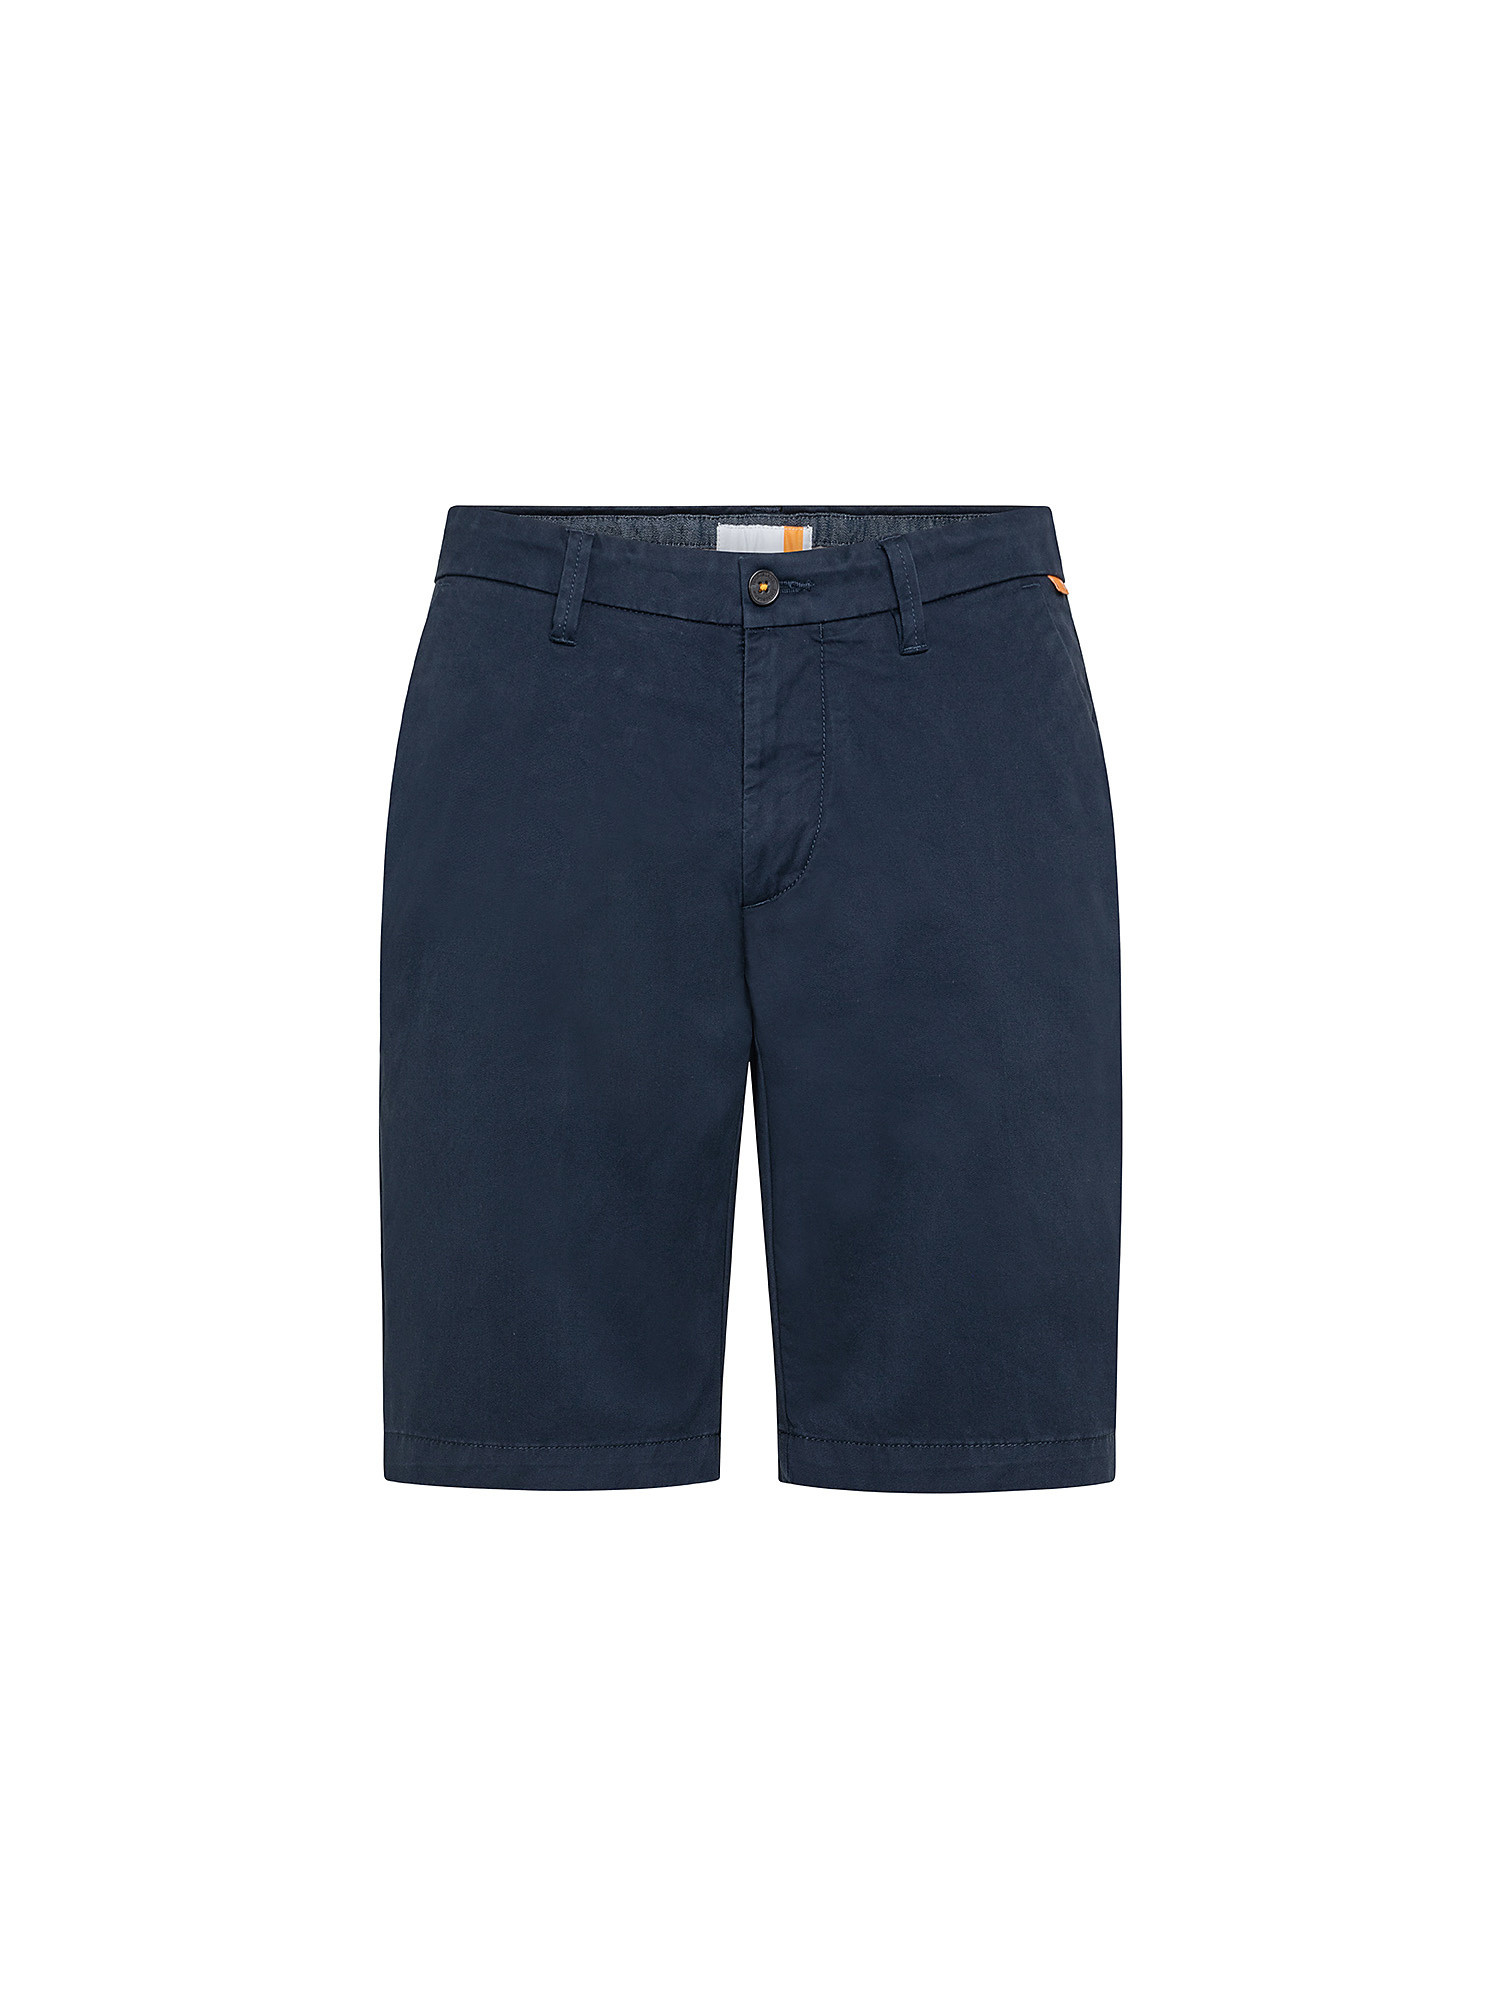 Shorts Chino da Uomo Elasticizzati Squam Lake, Blu, large